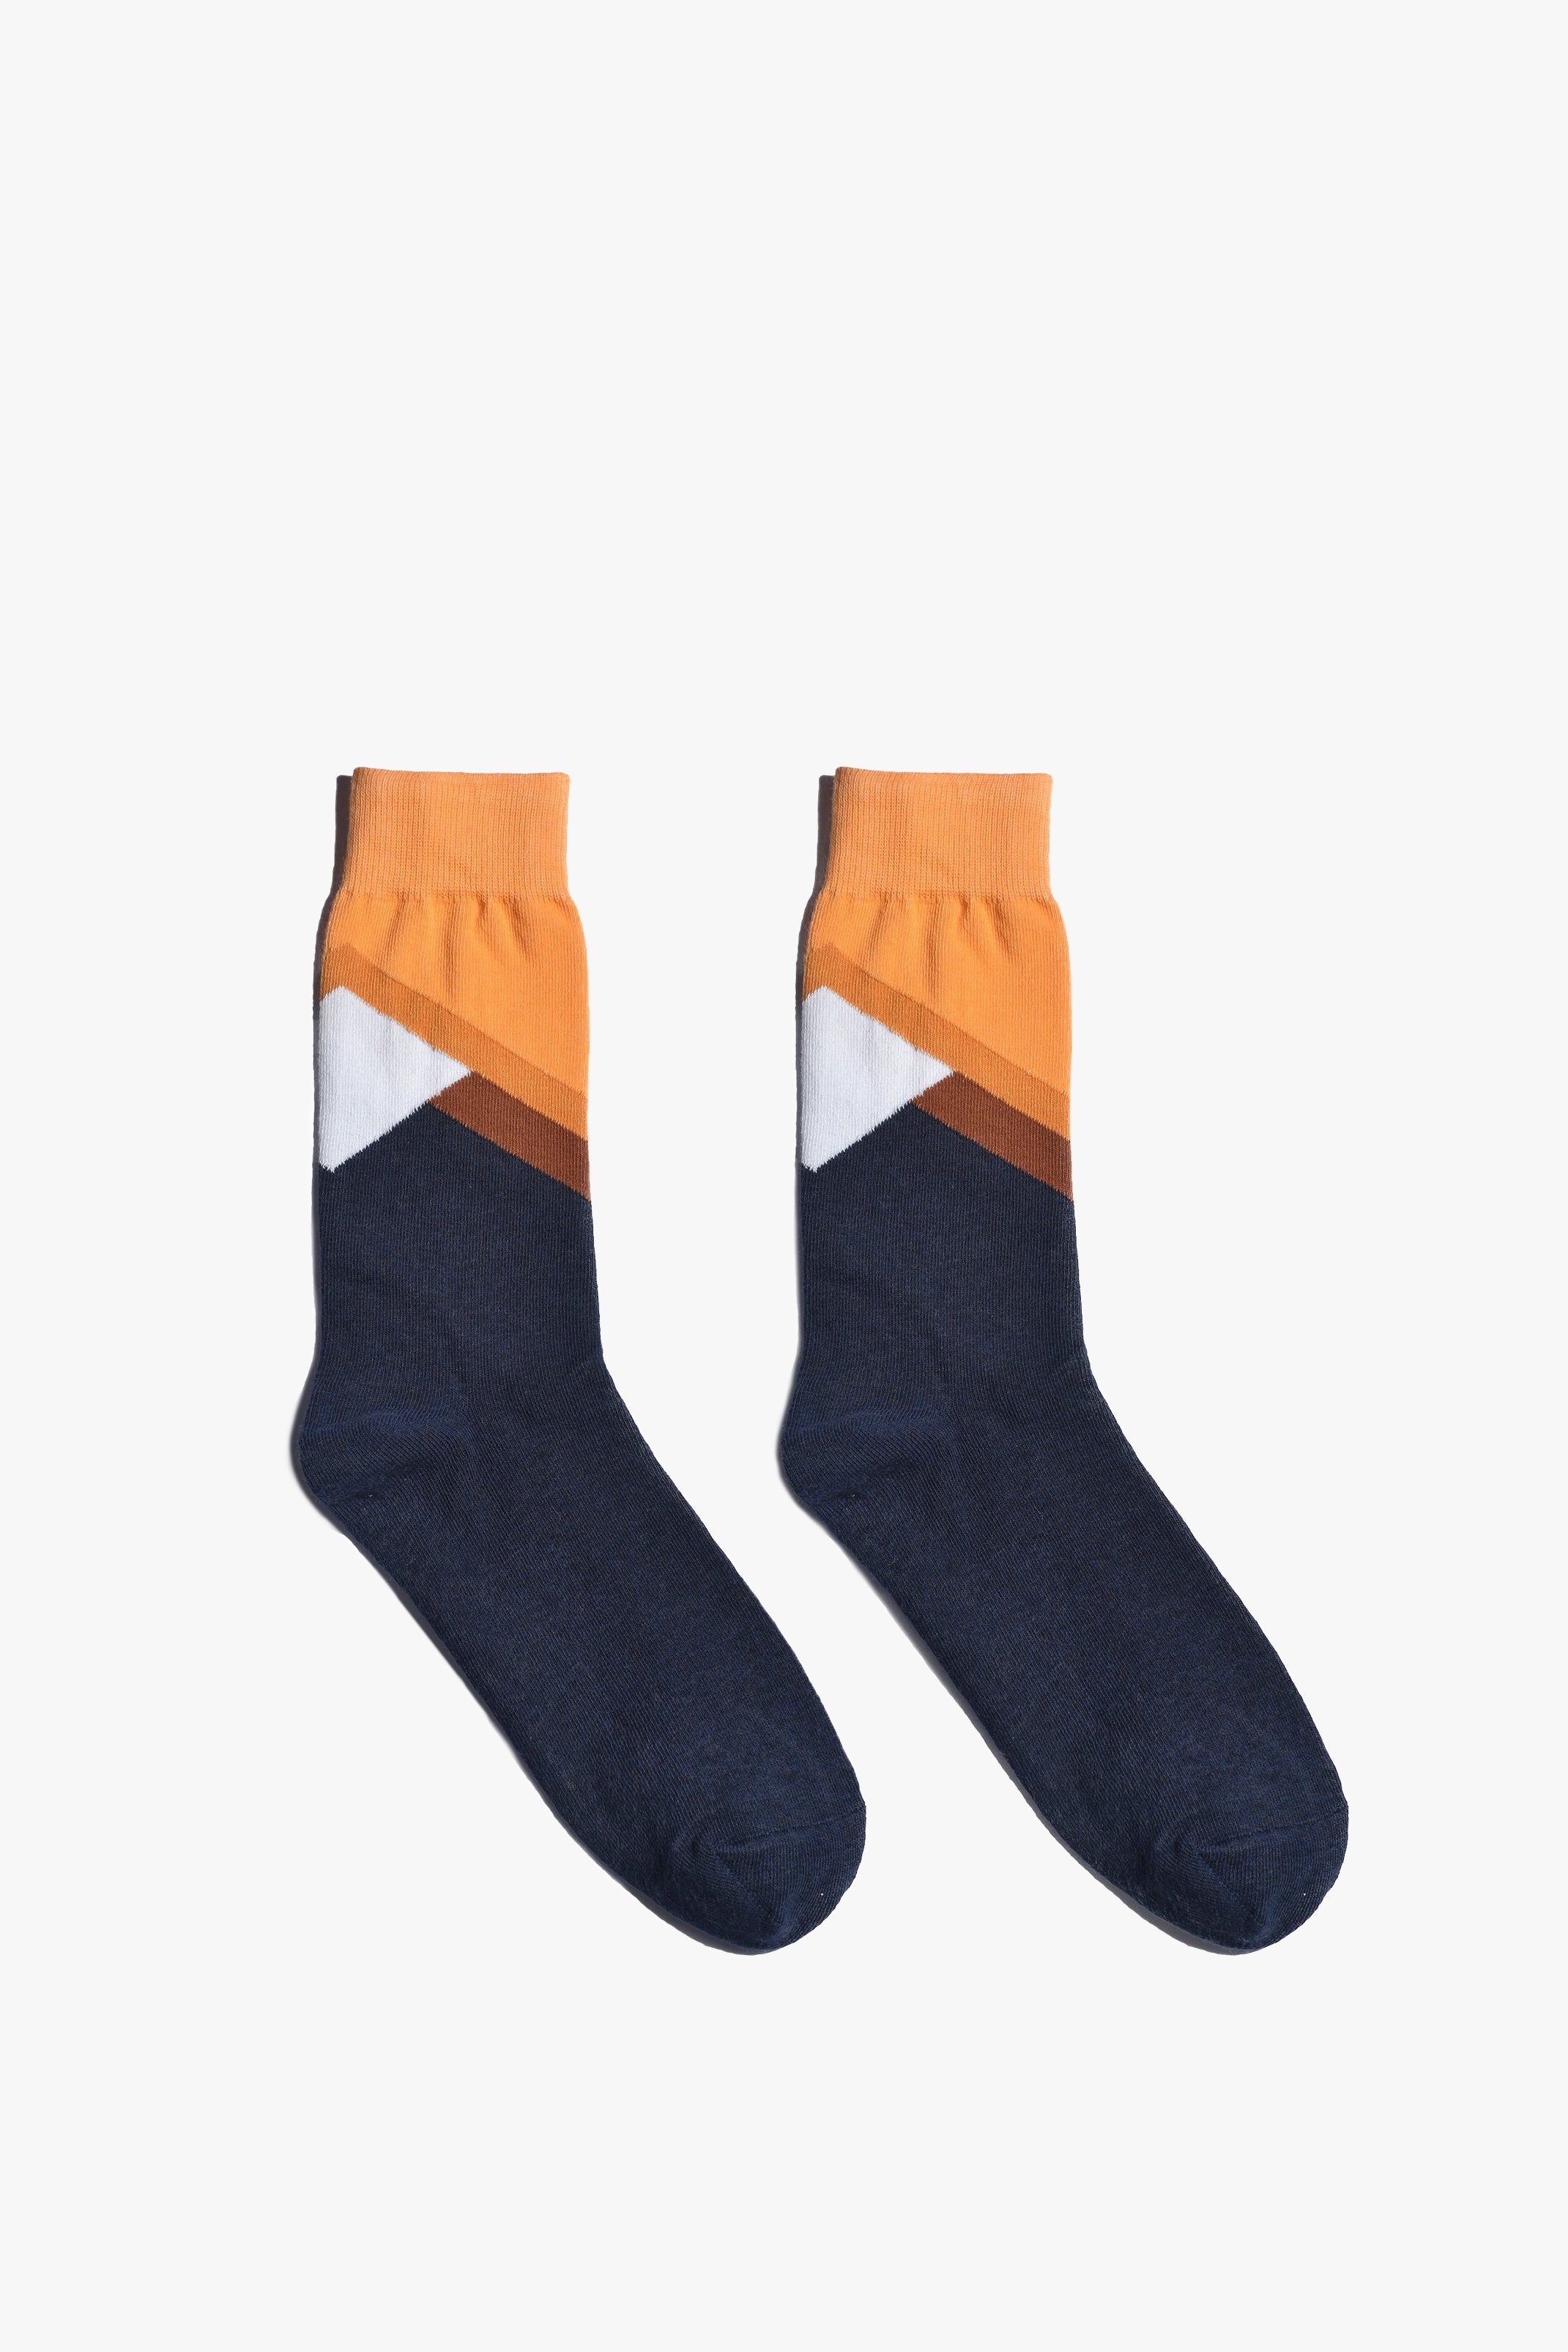 Ninety One Sock